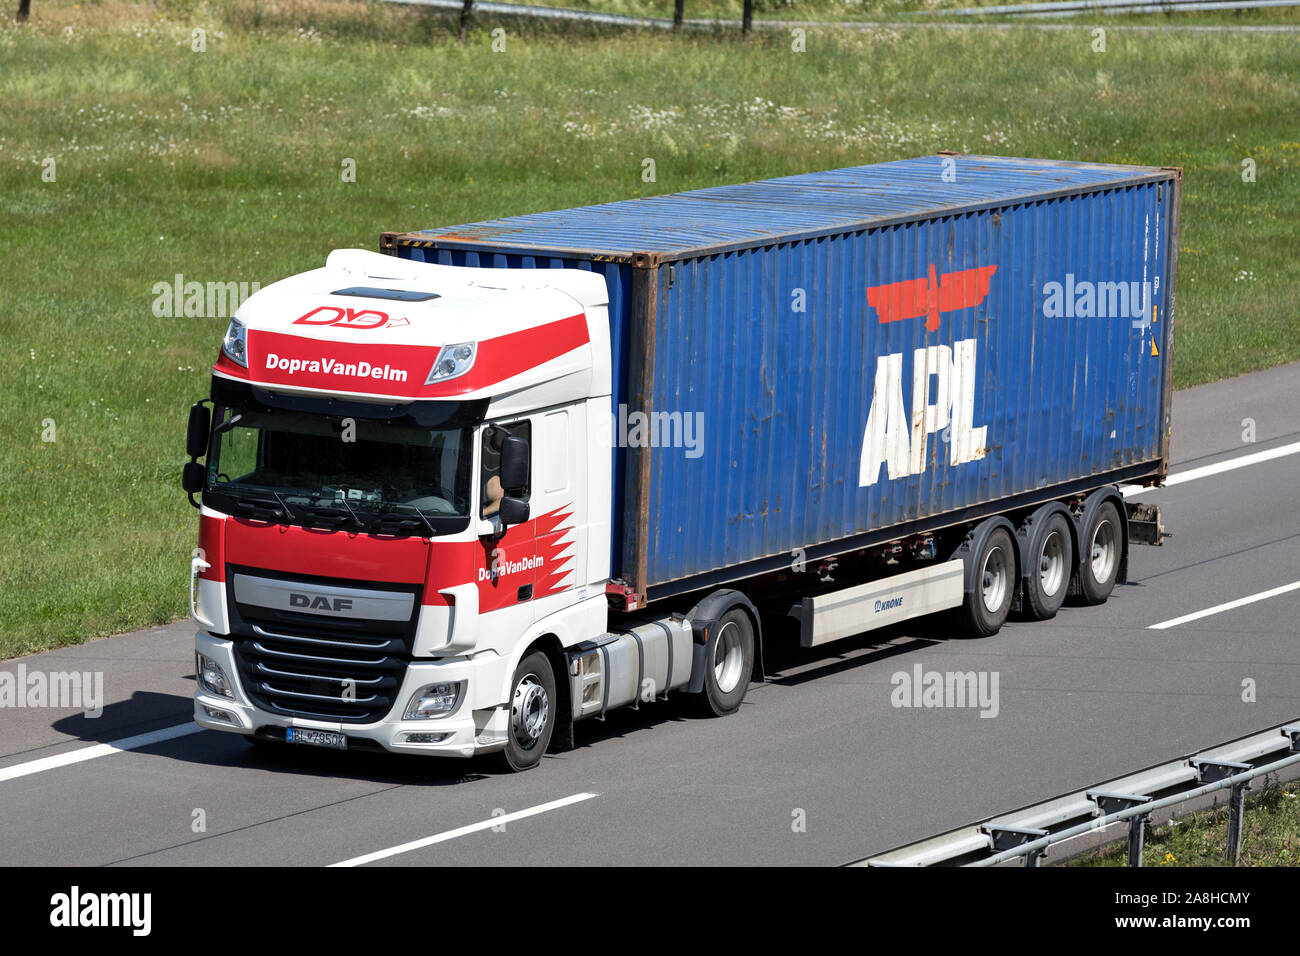 DopraVanDelm DAF truck with APL container on motorway. Stock Photo